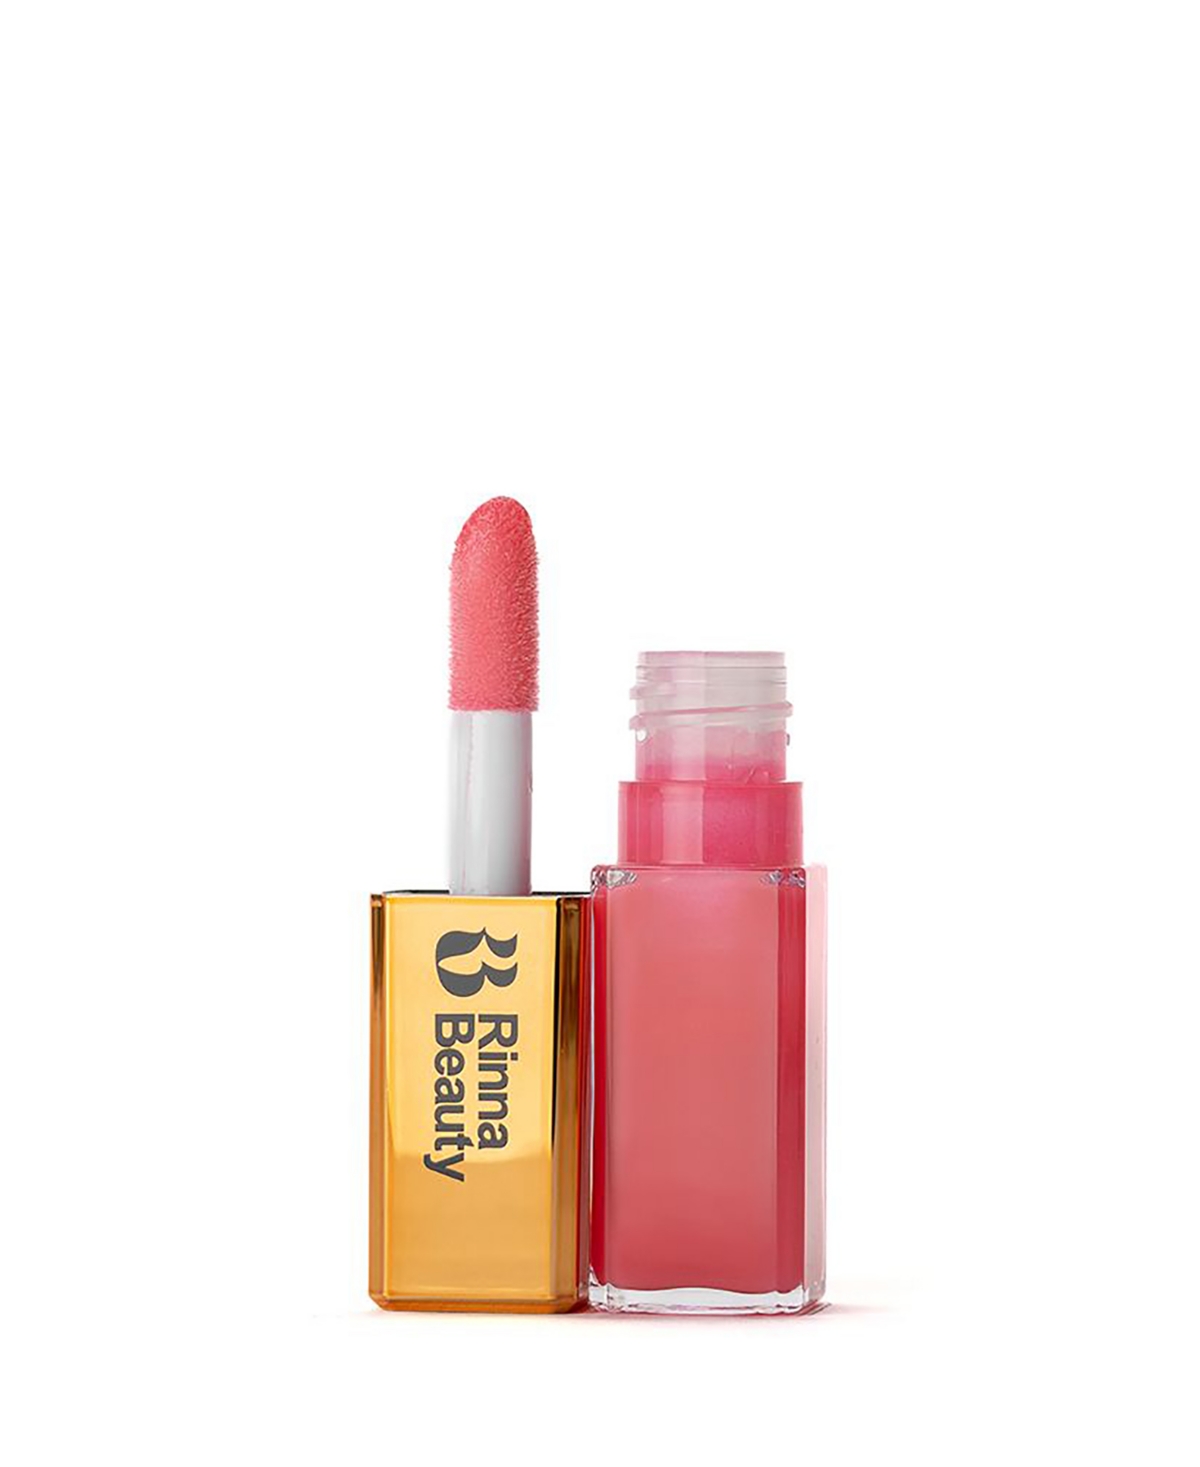 Larger Than Life Lip Plumping Oil, 0.30 oz. - Bright Bombshell (pink)